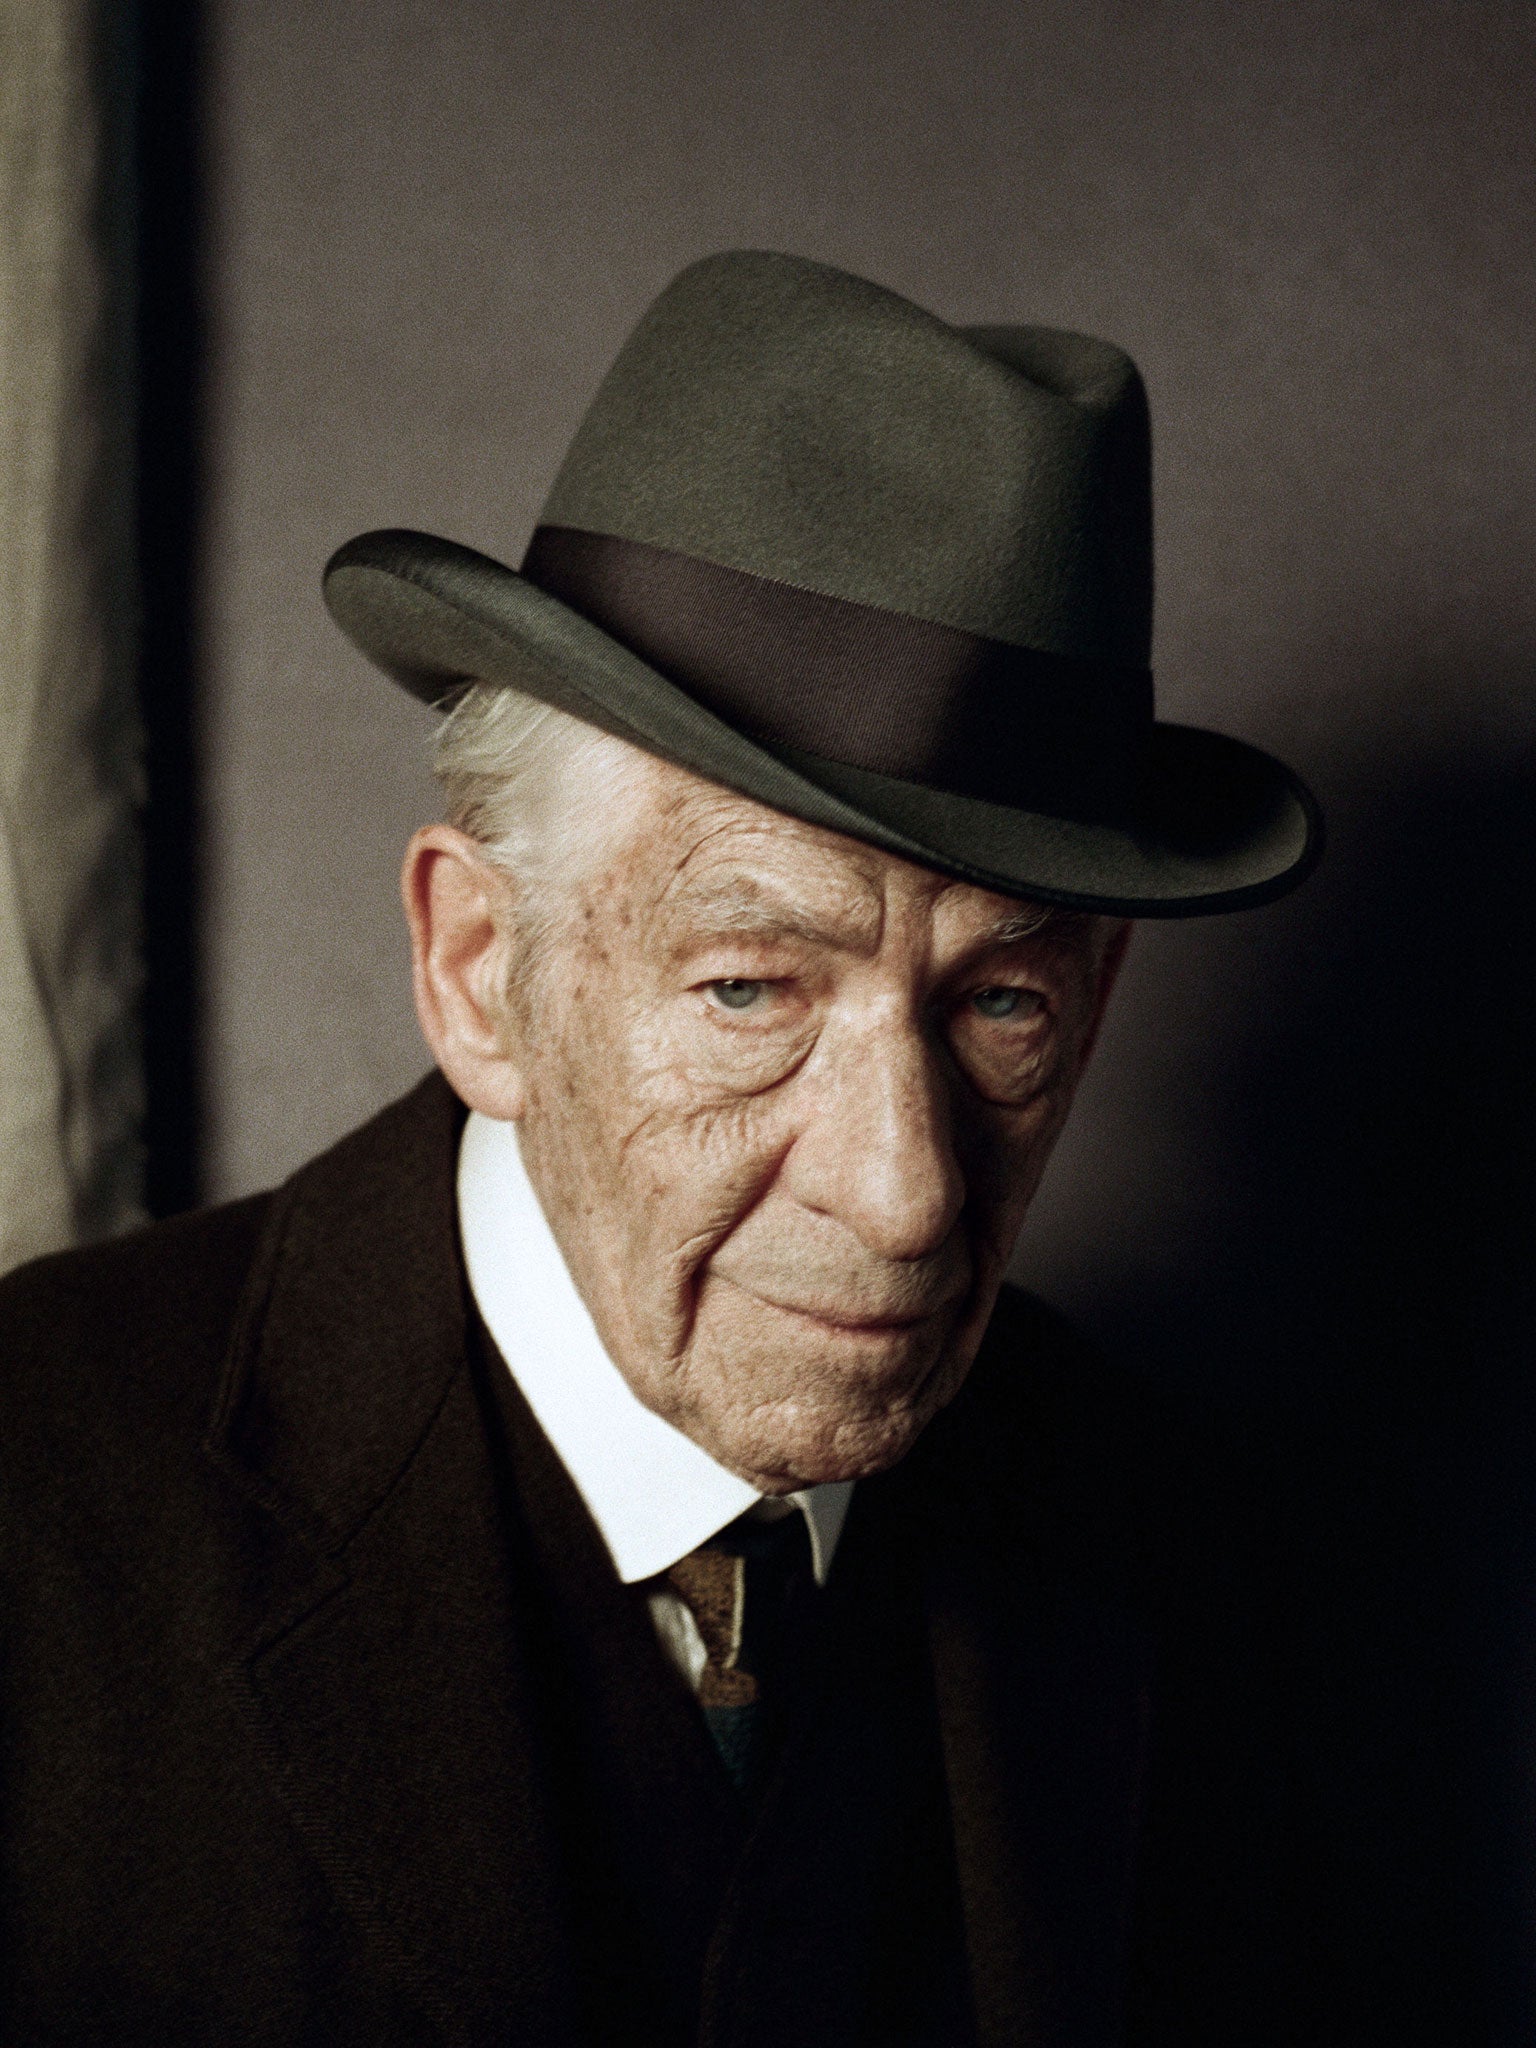 Sir Ian McKellen portrays the 93-year-old Sherlock Holmes